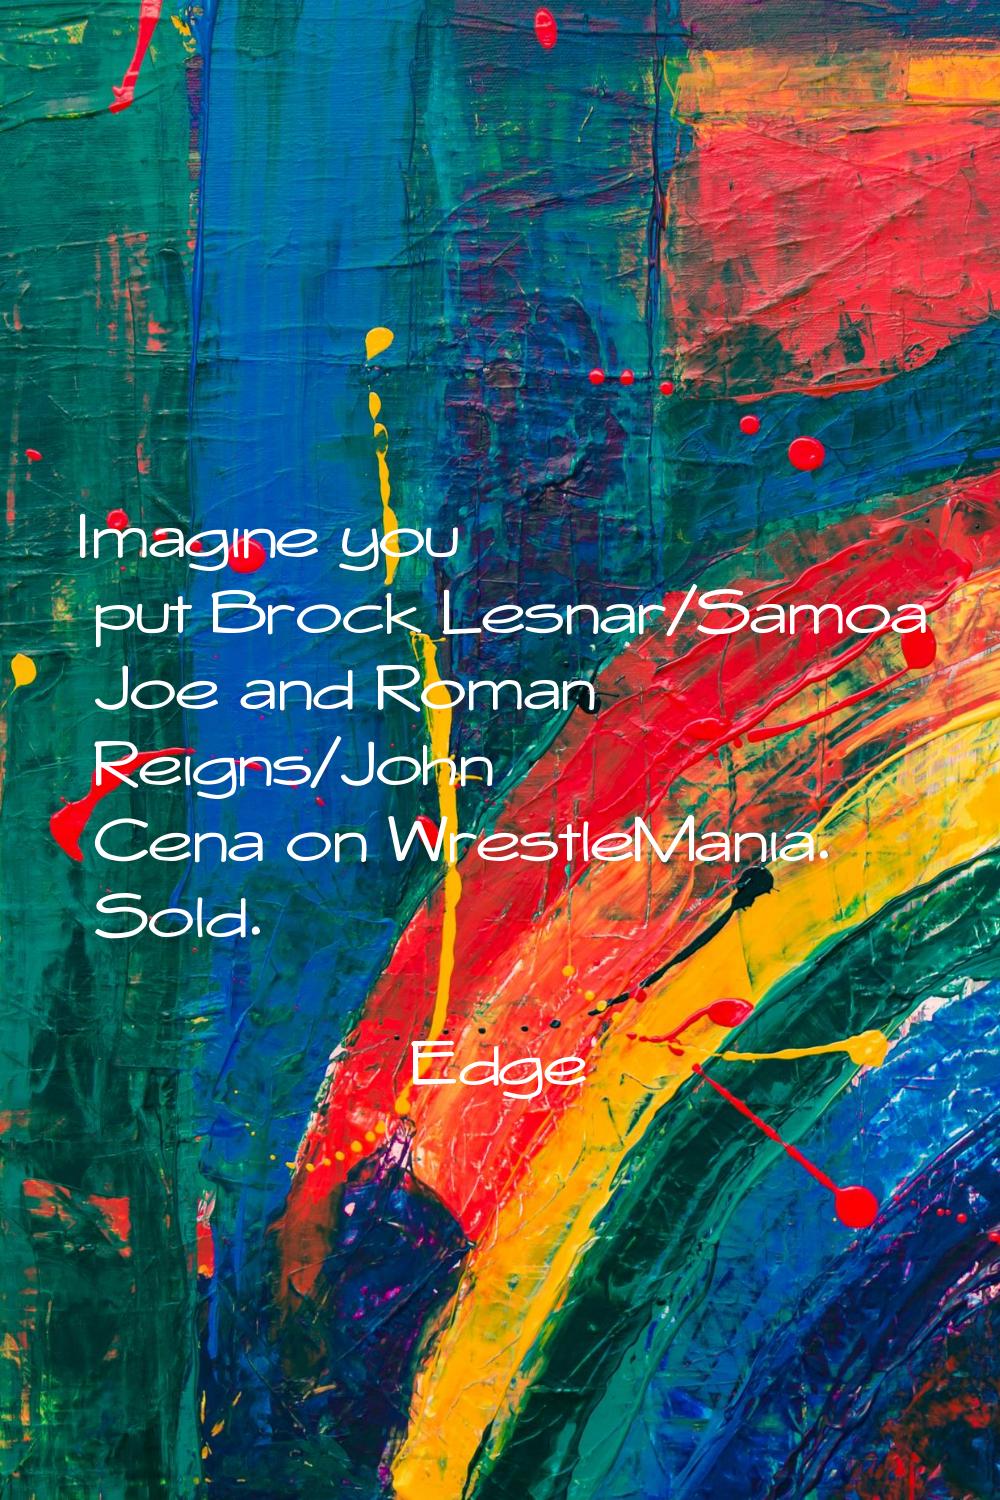 Imagine you put Brock Lesnar/Samoa Joe and Roman Reigns/John Cena on WrestleMania. Sold.